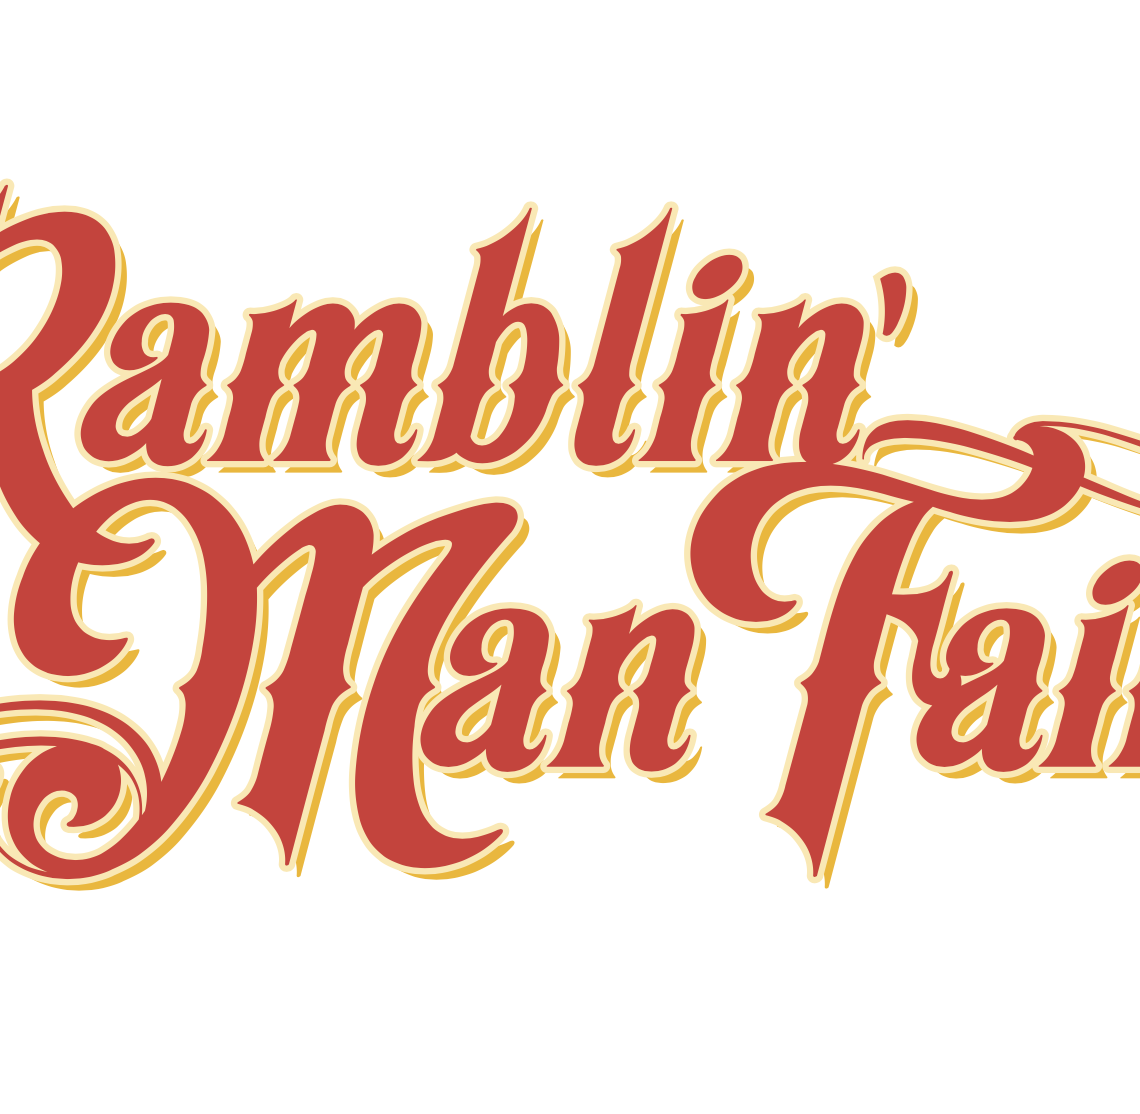 Ramblin’ Man Fair. Mote Park, Maidstone. Saturday 20 July 2019.